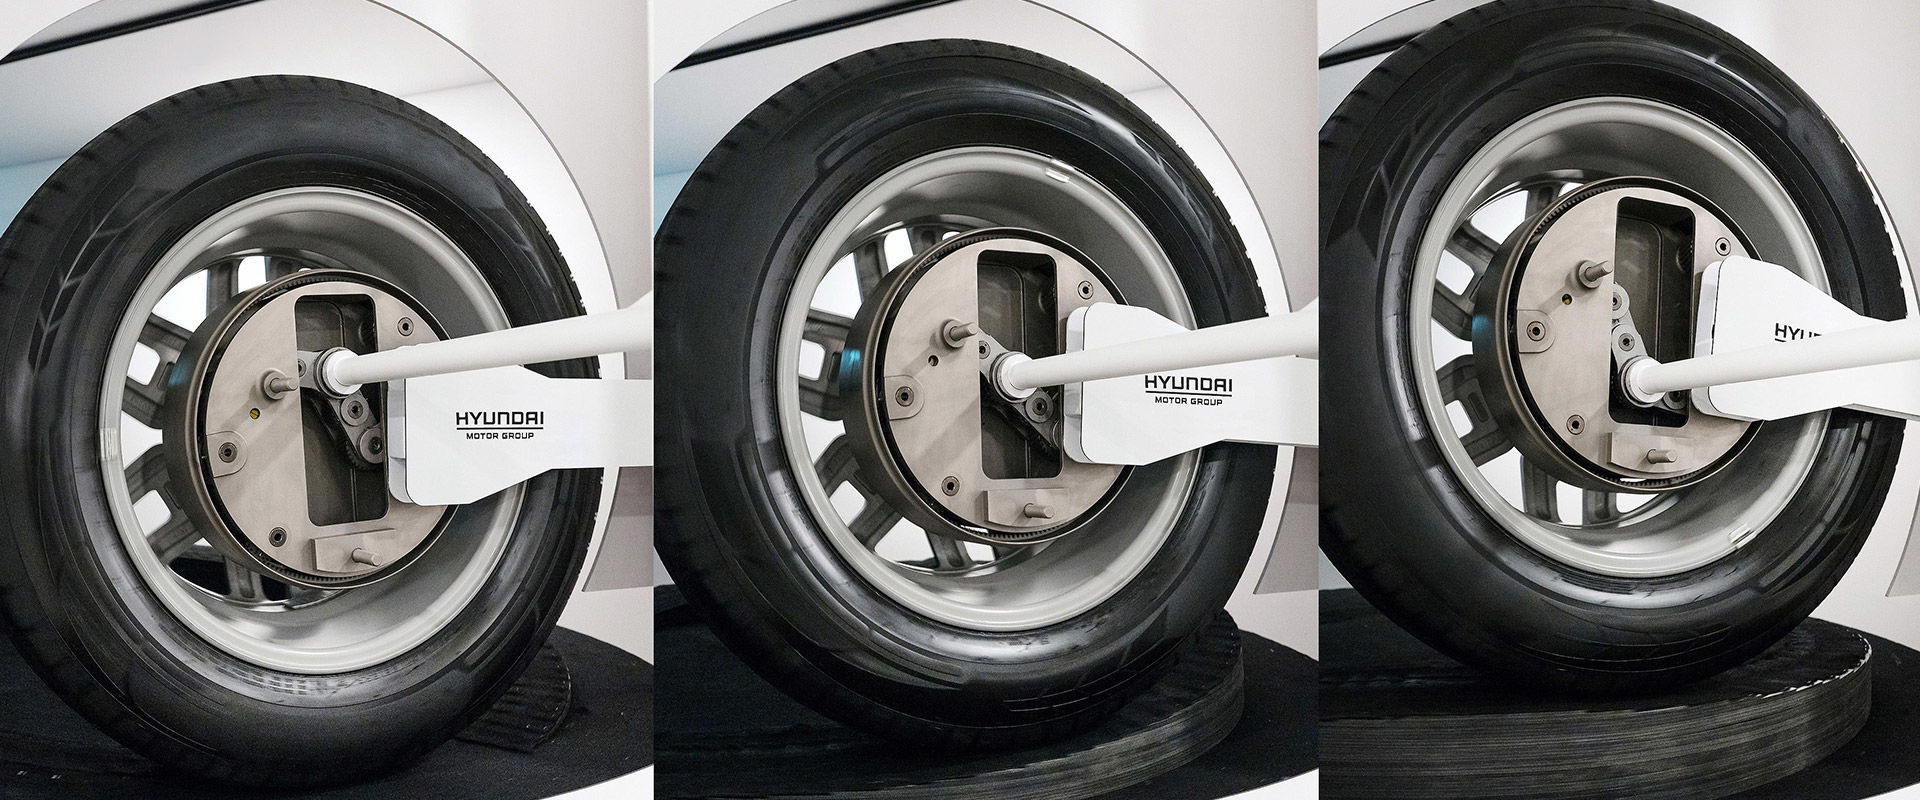 Hyundai Motor and Kia Unveil Paradigm-Shifting 'Uni Wheel' Drive System to Transform Mobility Design   